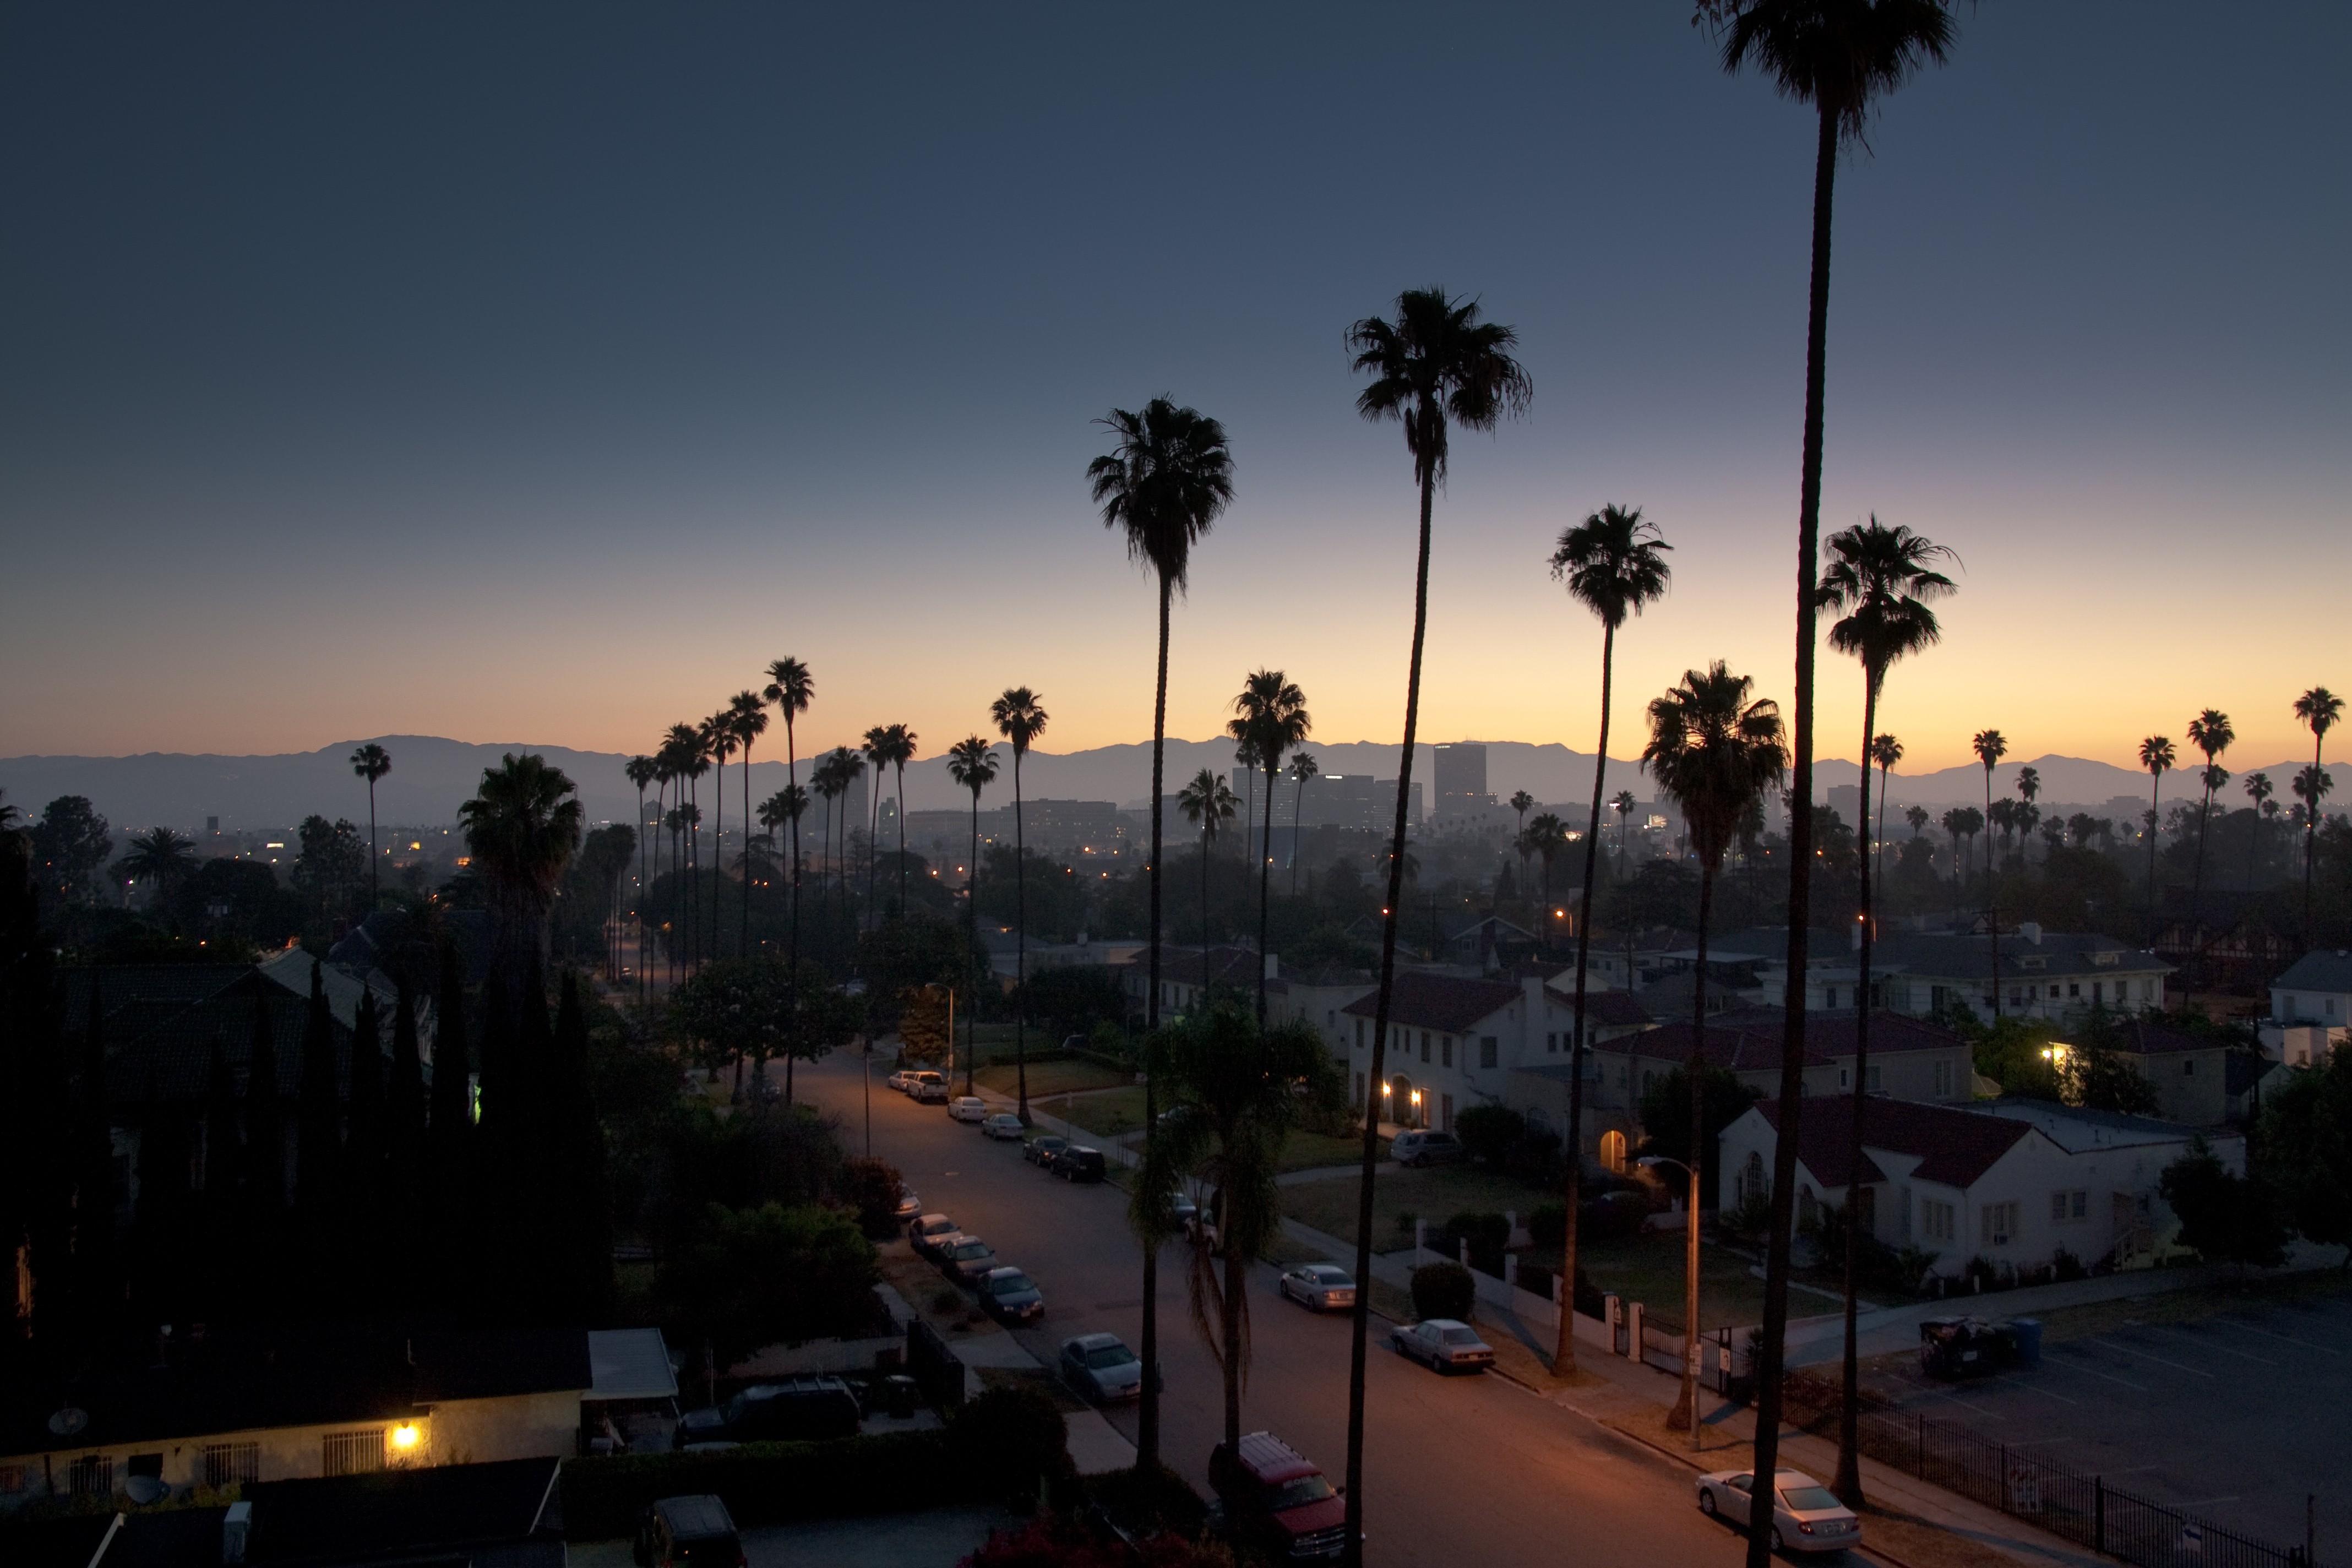 General 4272x2848 sunset cityscape Los Angeles dusk palm trees street city USA urban